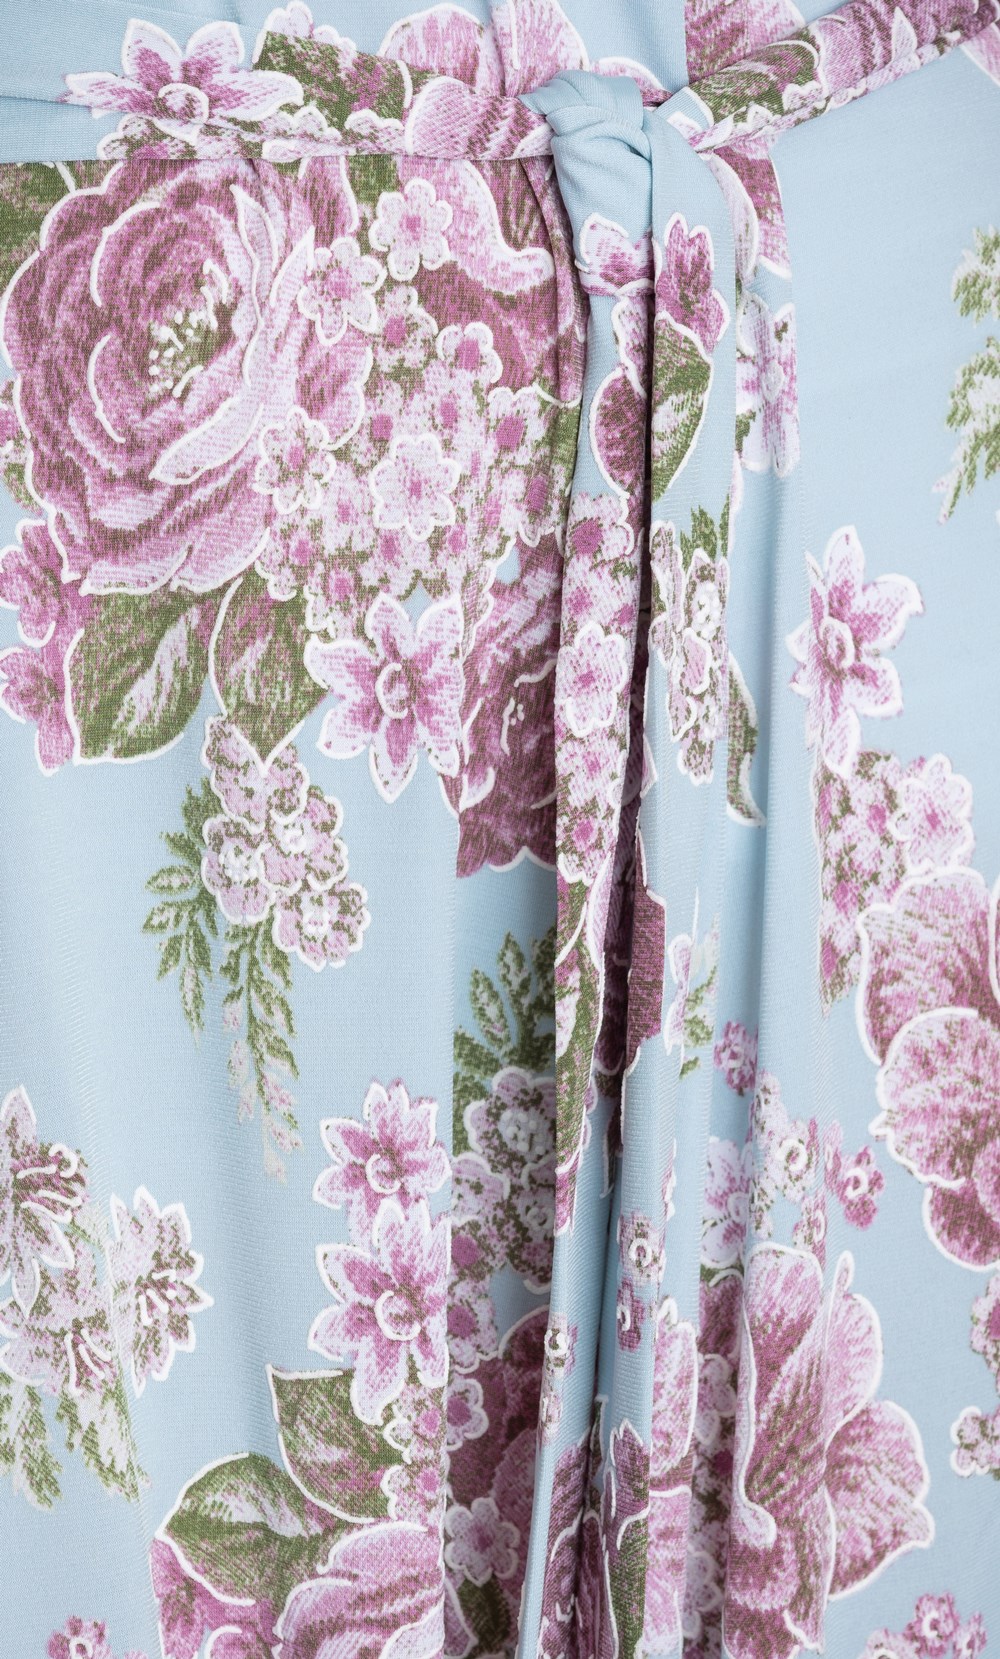 Anna Rose Textured Printed Jersey Midi Dress